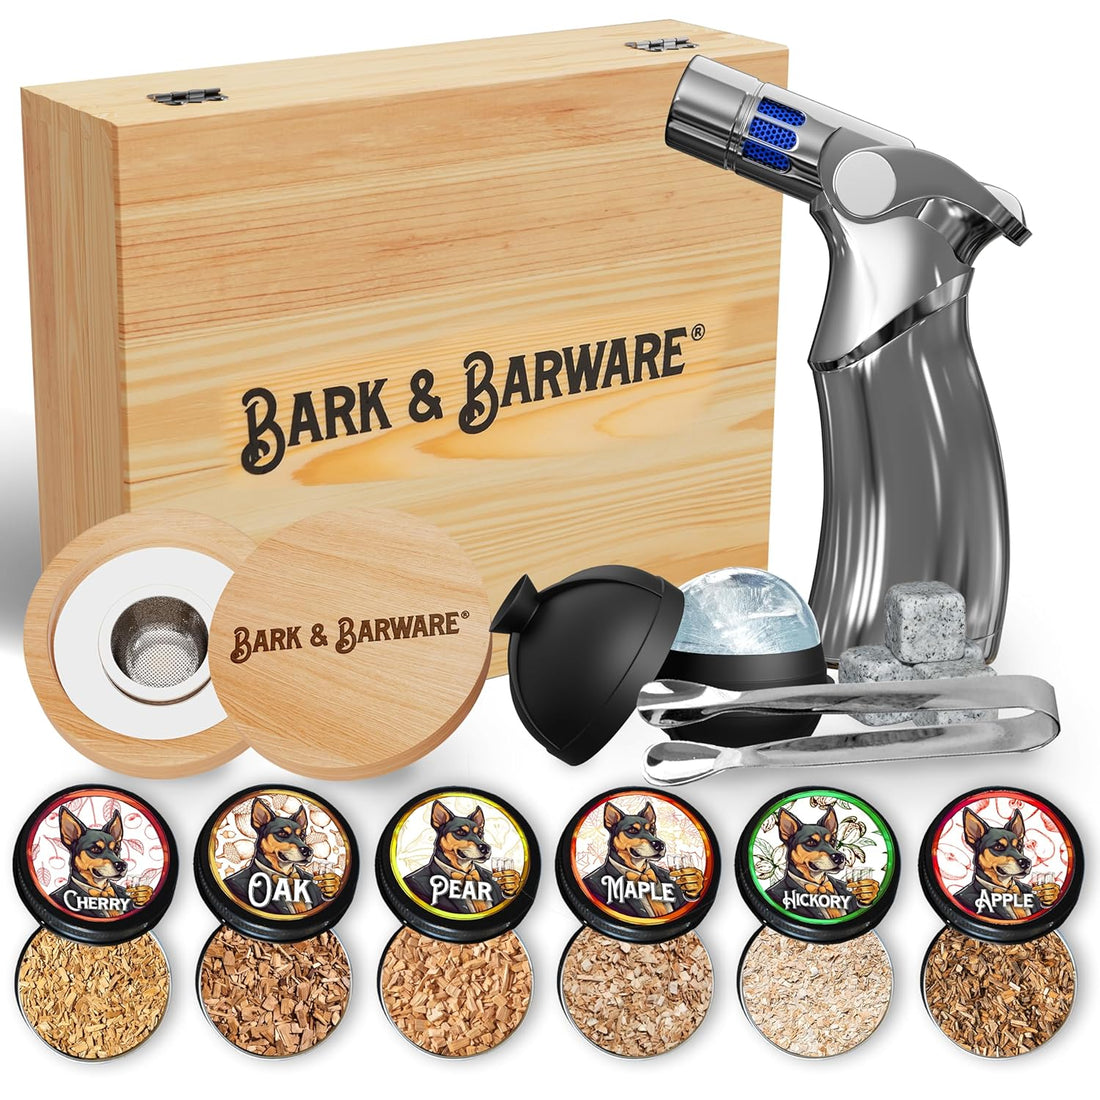 Bark & Barware Premium Cocktail Smoker Kit with Torch - Brown Wood Box, Silver Tools, 6 Flavors Wood Chips - Old Fashion Bourbon Smoker Kit - Smoking Cocktails, Drinks & Mixology (no Butane)